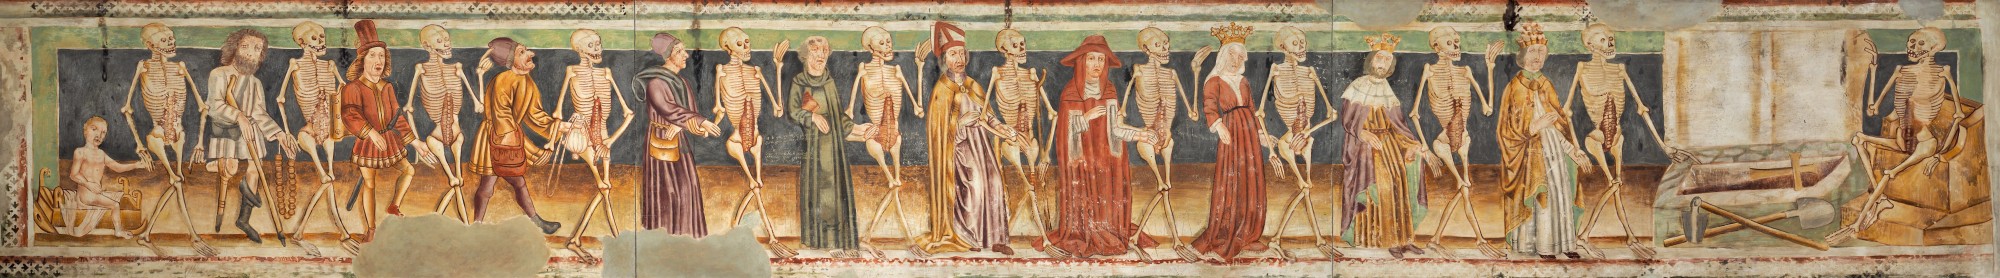 Dance of Death (replica of 15th century fresco; National Gallery of Slovenia)